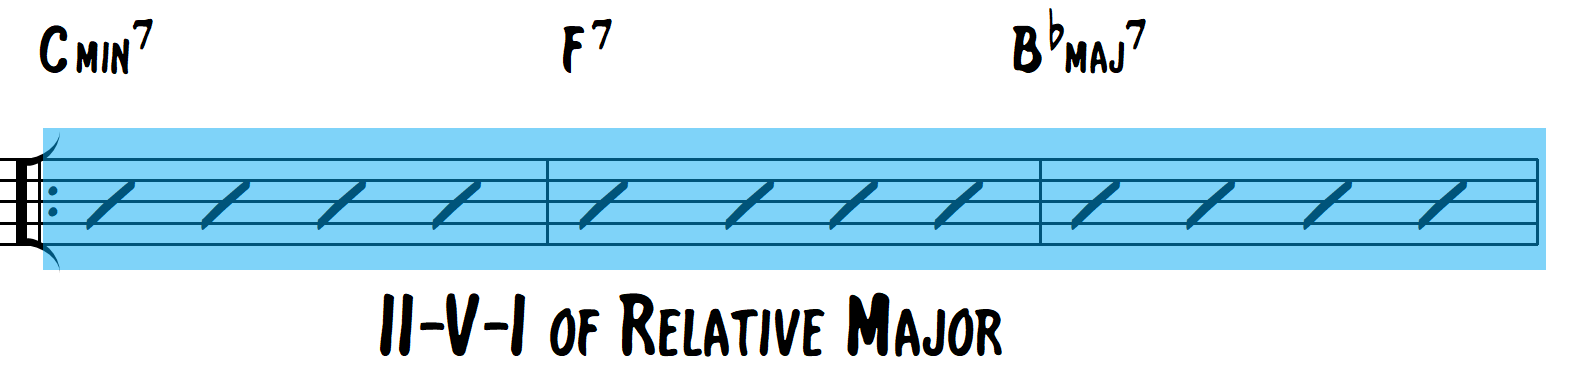 relative major 2 5 1